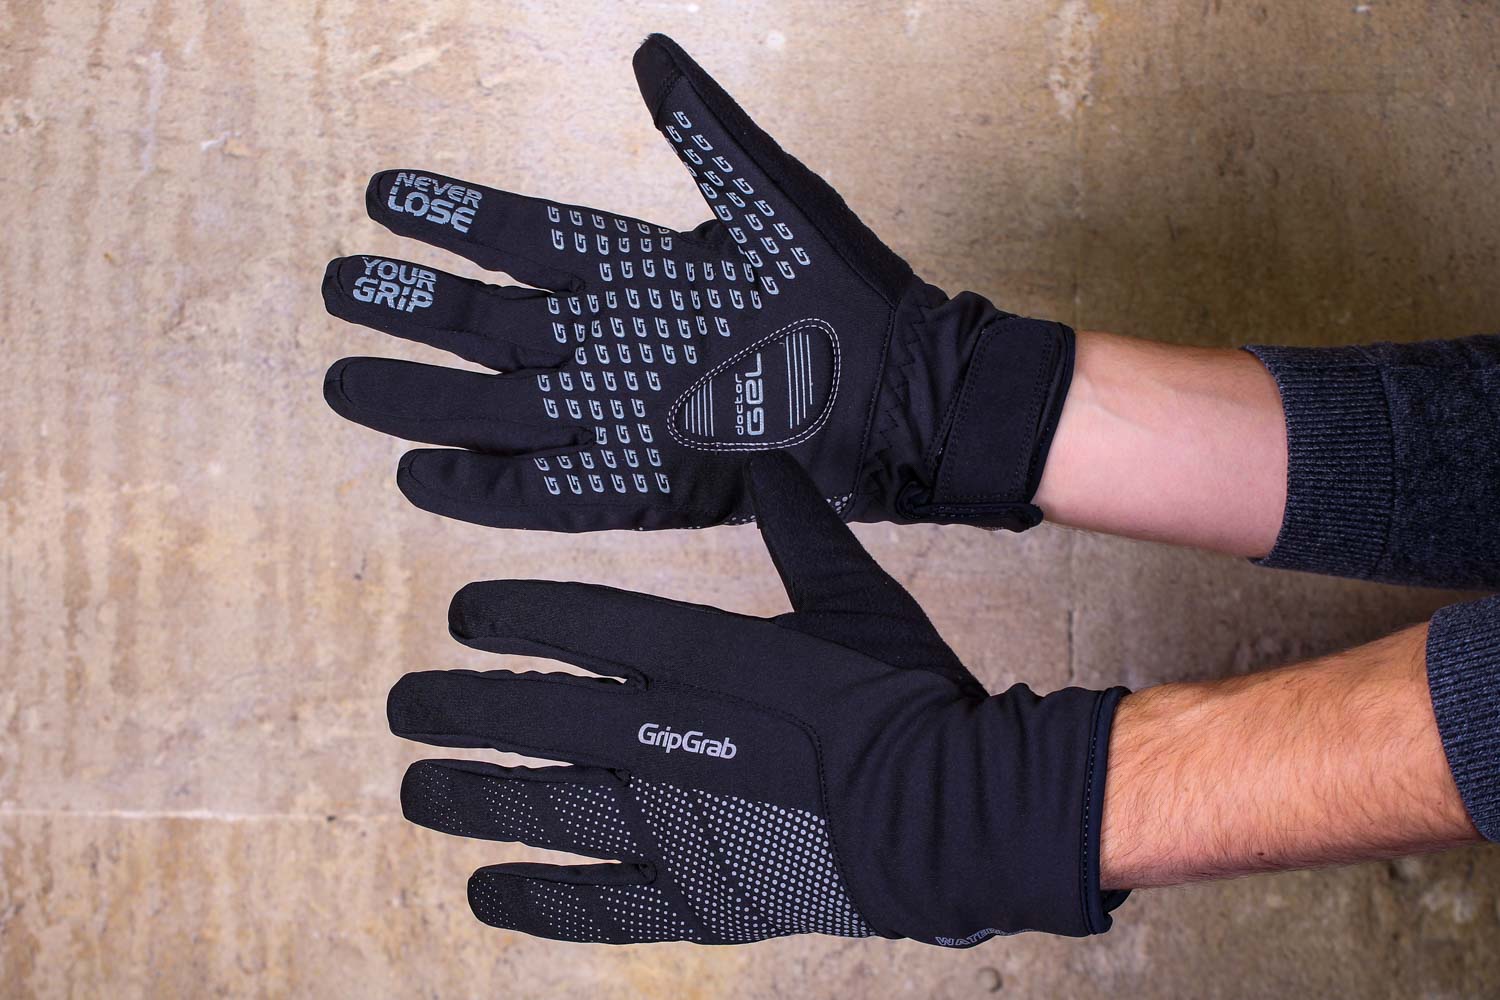 warm waterproof cycling gloves